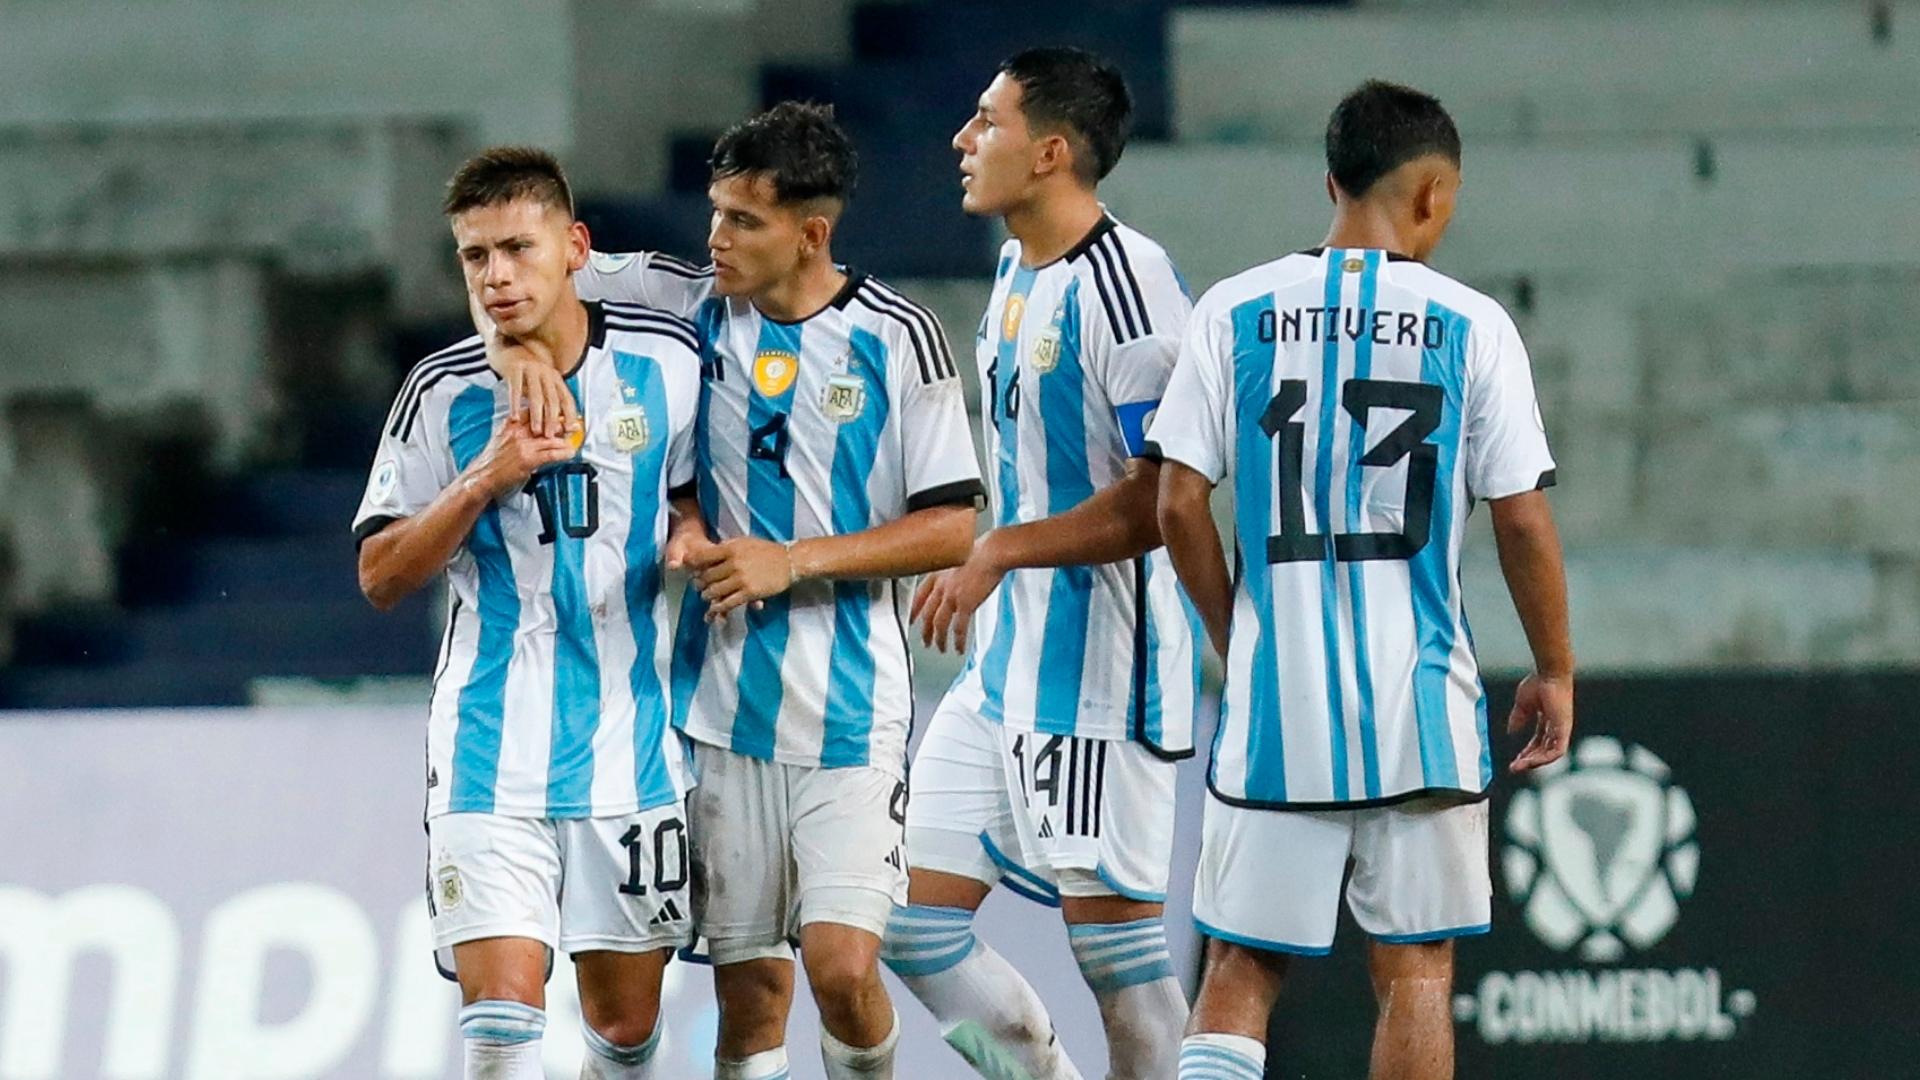 Selección de fútbol sub-17 de argentina